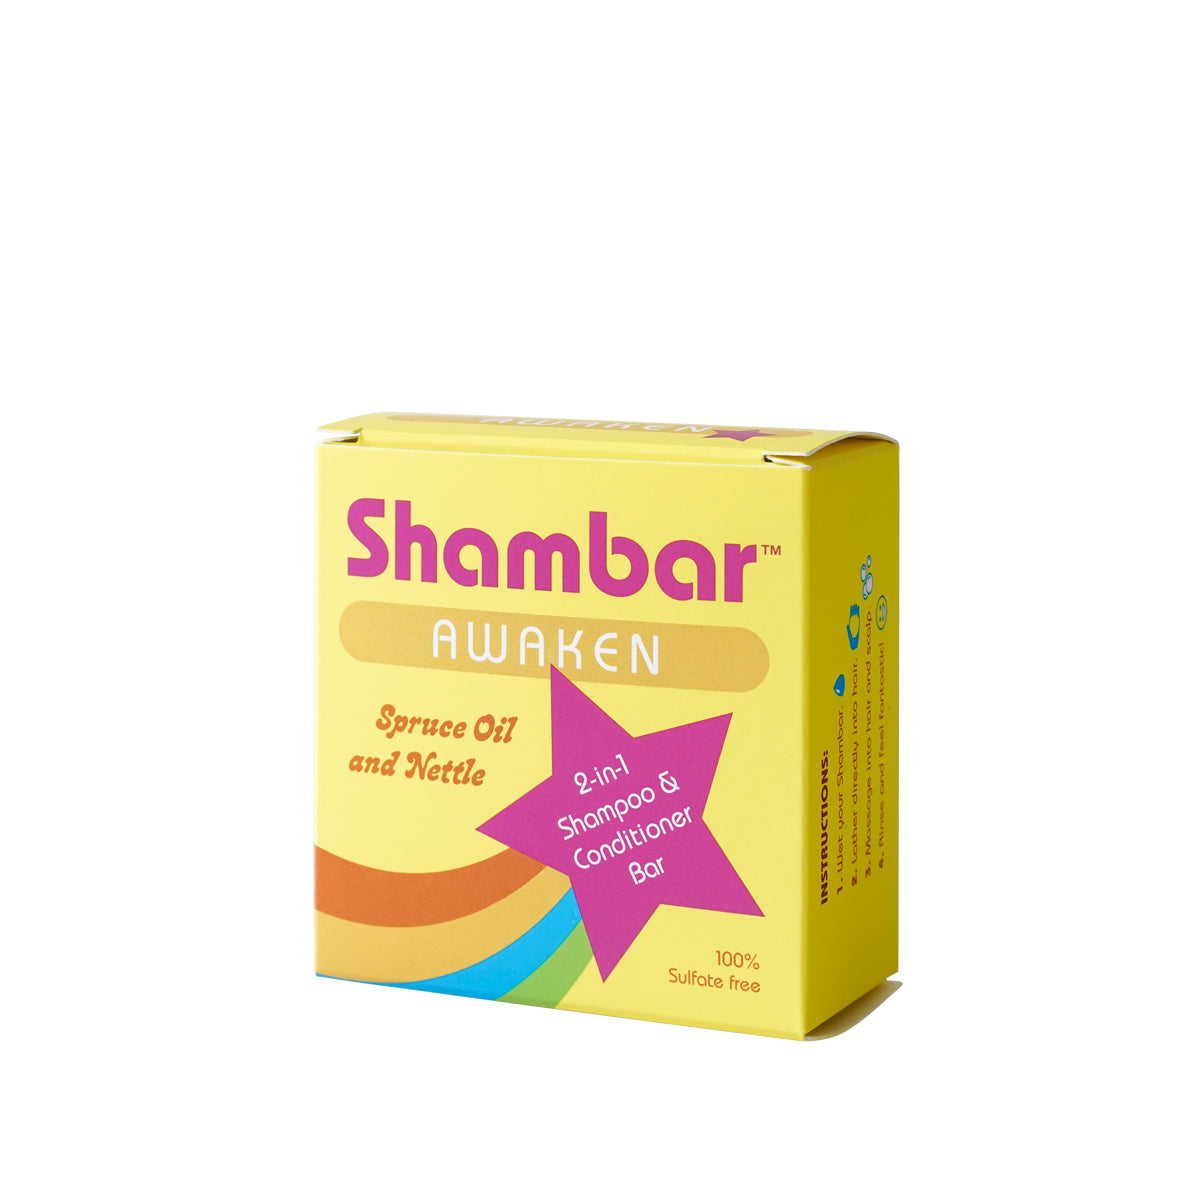 Alternate image of Shampoo Bar Awaken